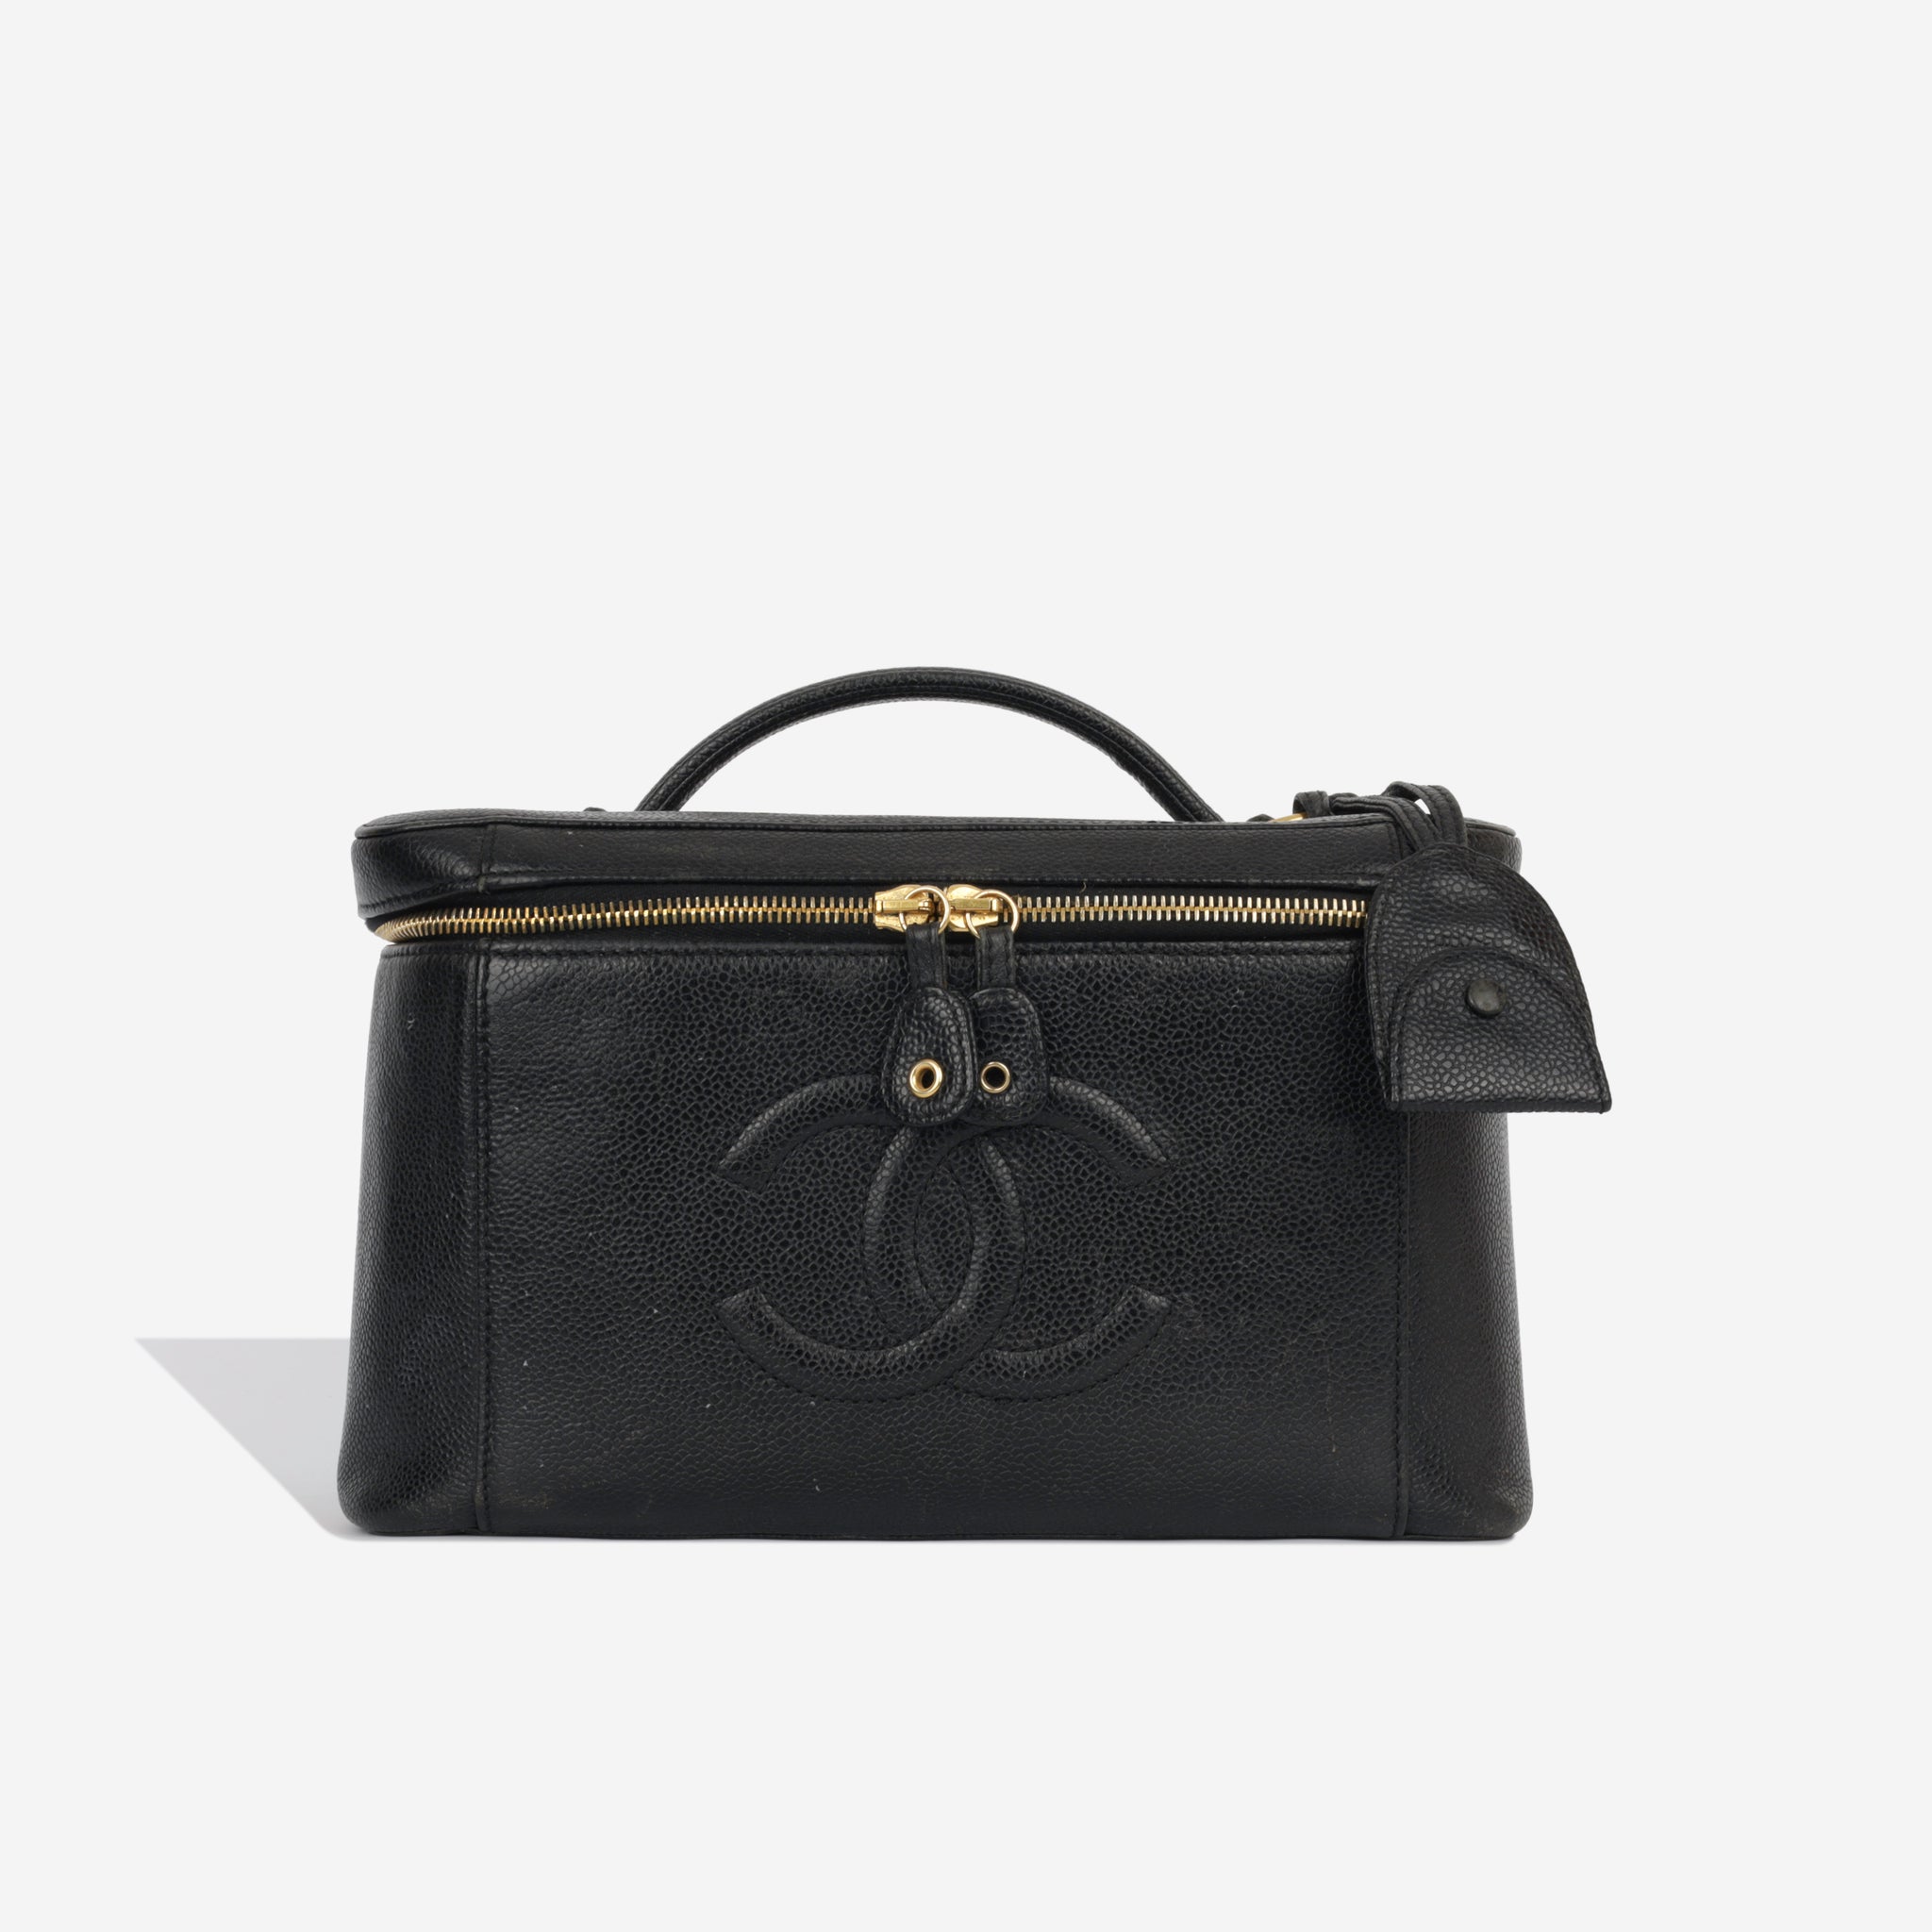 Chanel Flap Box Vintage 1997 Classic Single Rare Black Caviar Leather Shoulder Bag